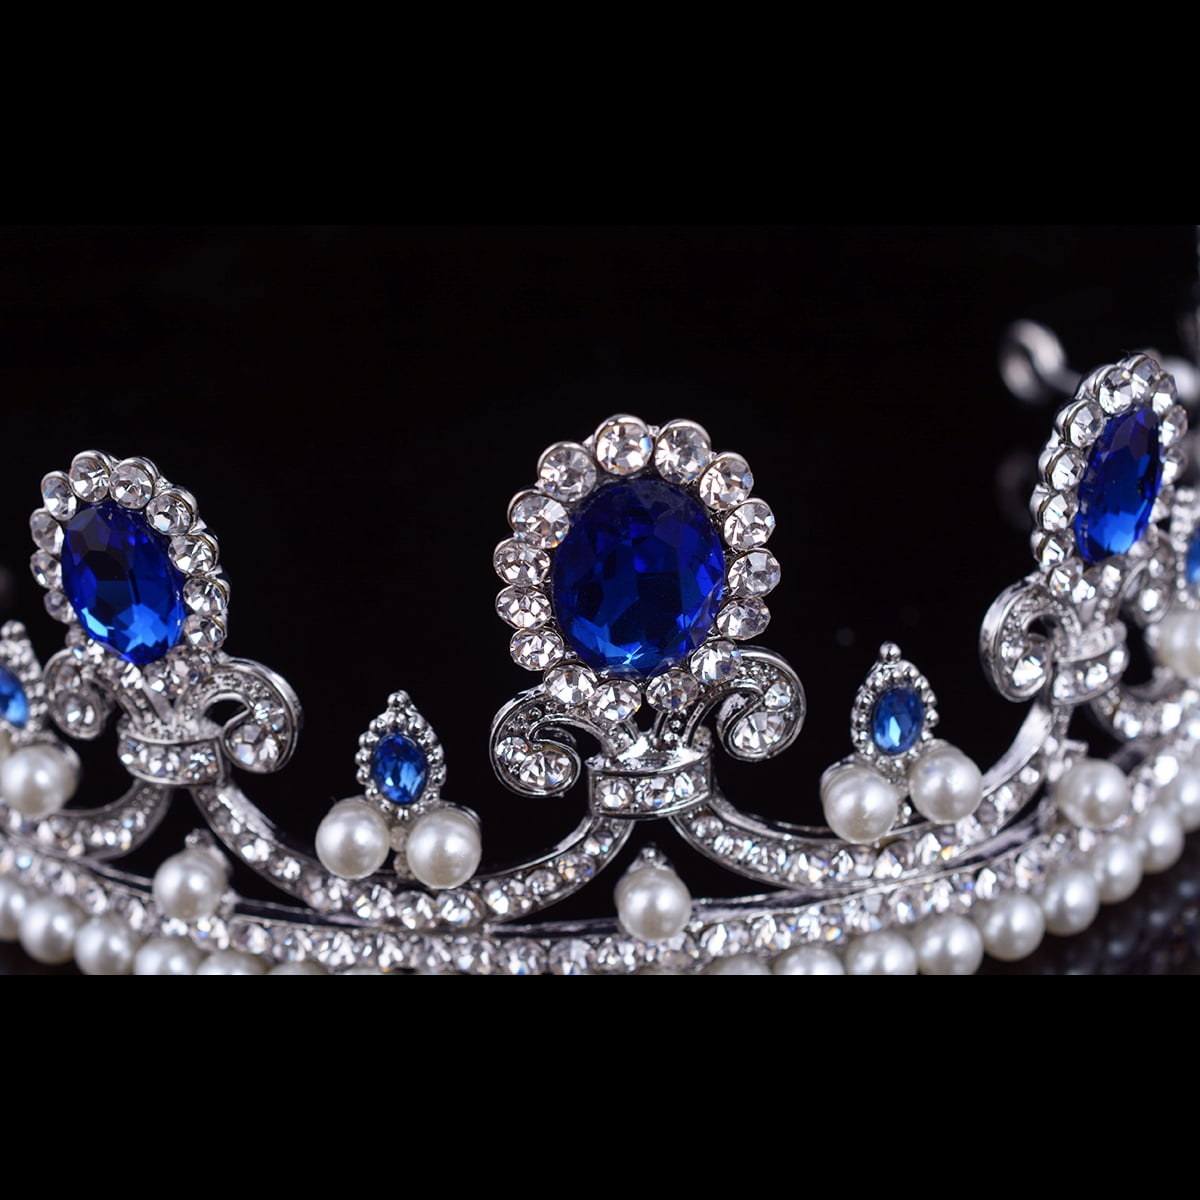 Princess Wedding Bridal Rhinestone Crystal Crown Hair Tiara Band 2019Hot V3Z8 